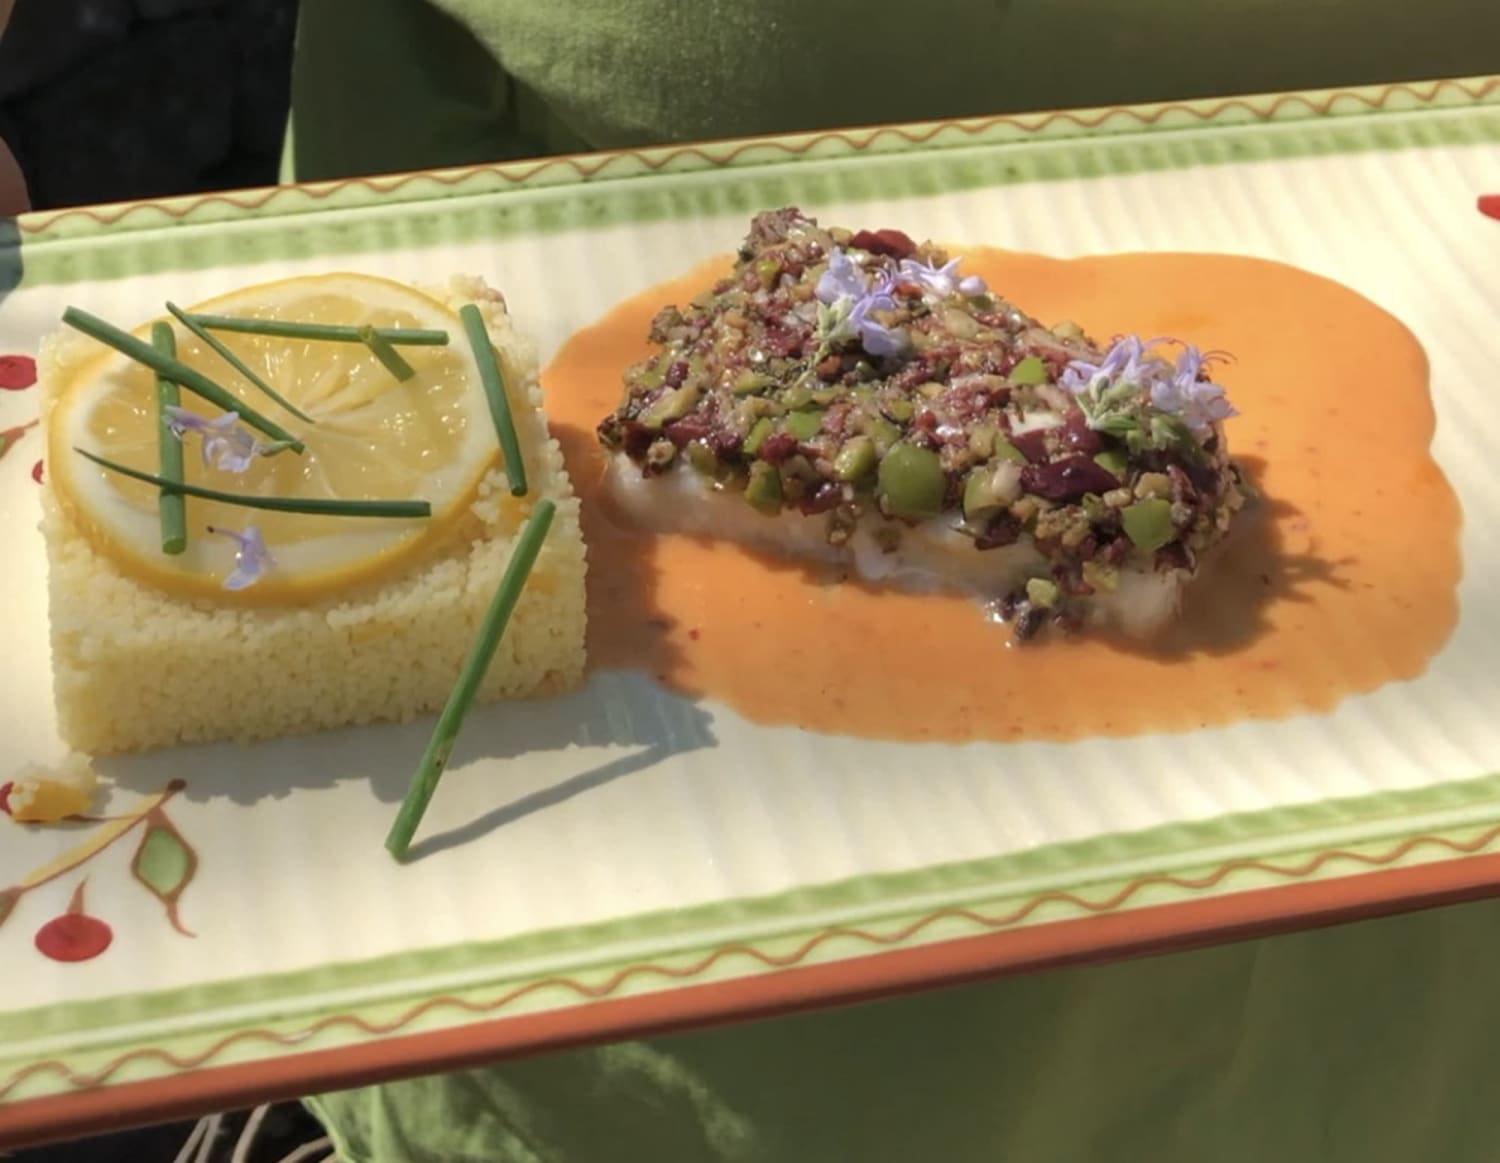 Chef Thierry Rautureau shares his delicious Alaska Pollock recipes